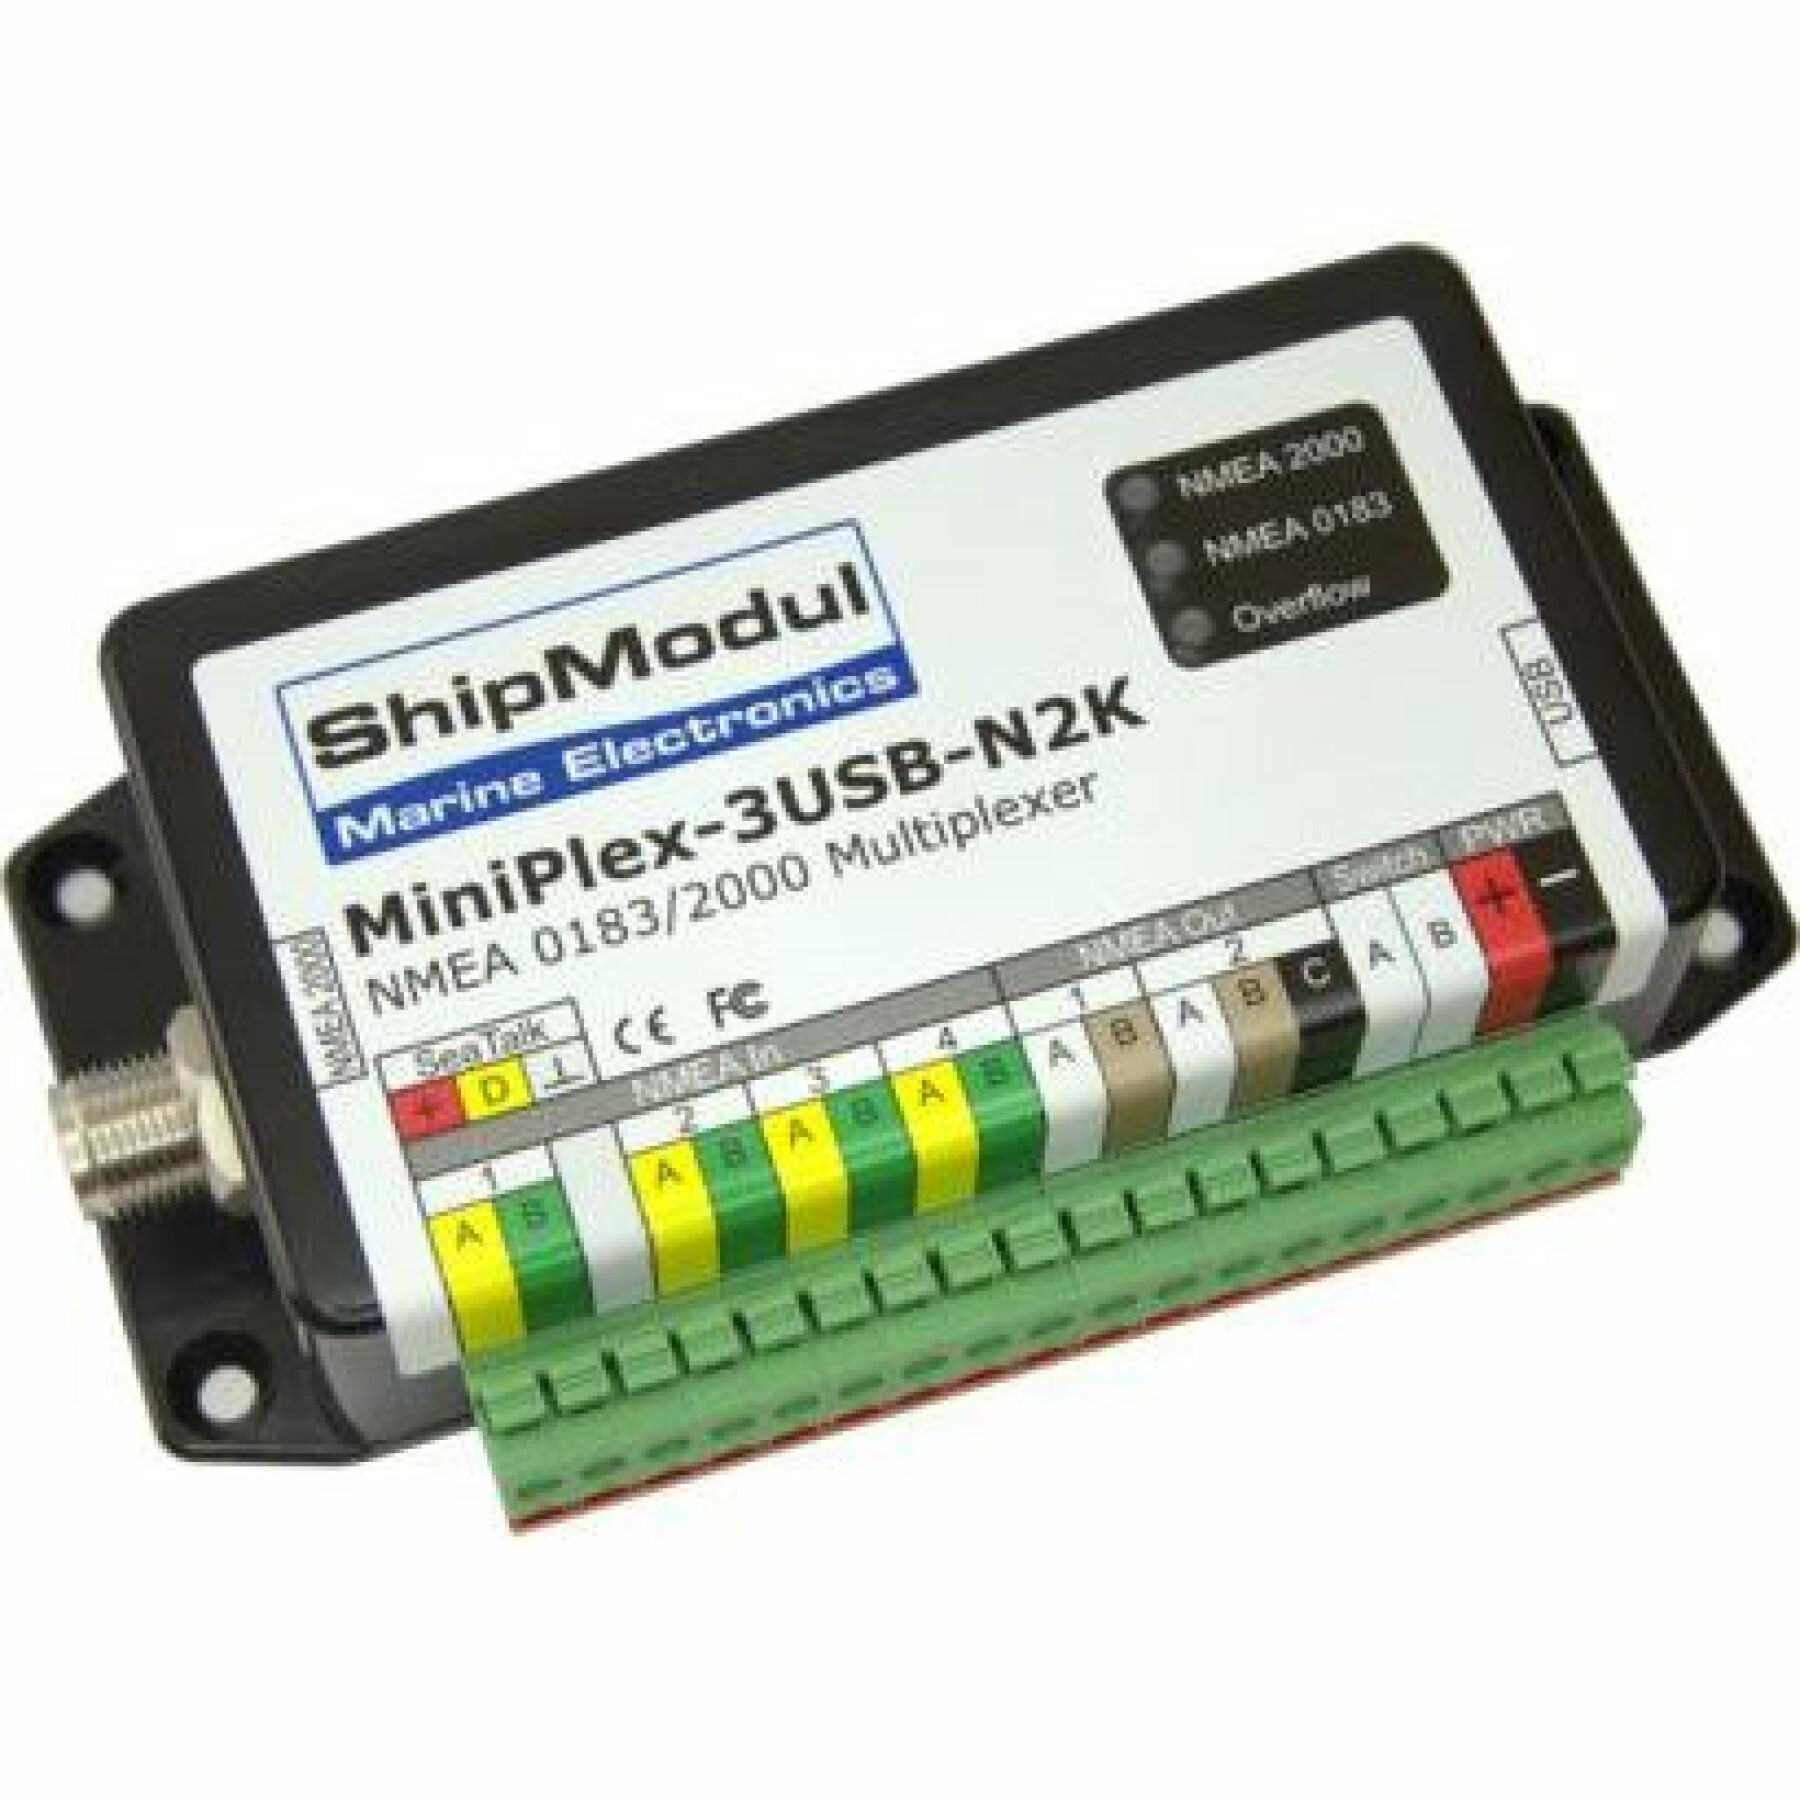 Versione usb del multiplexer ShipModul Miniplex-3USB-N2K